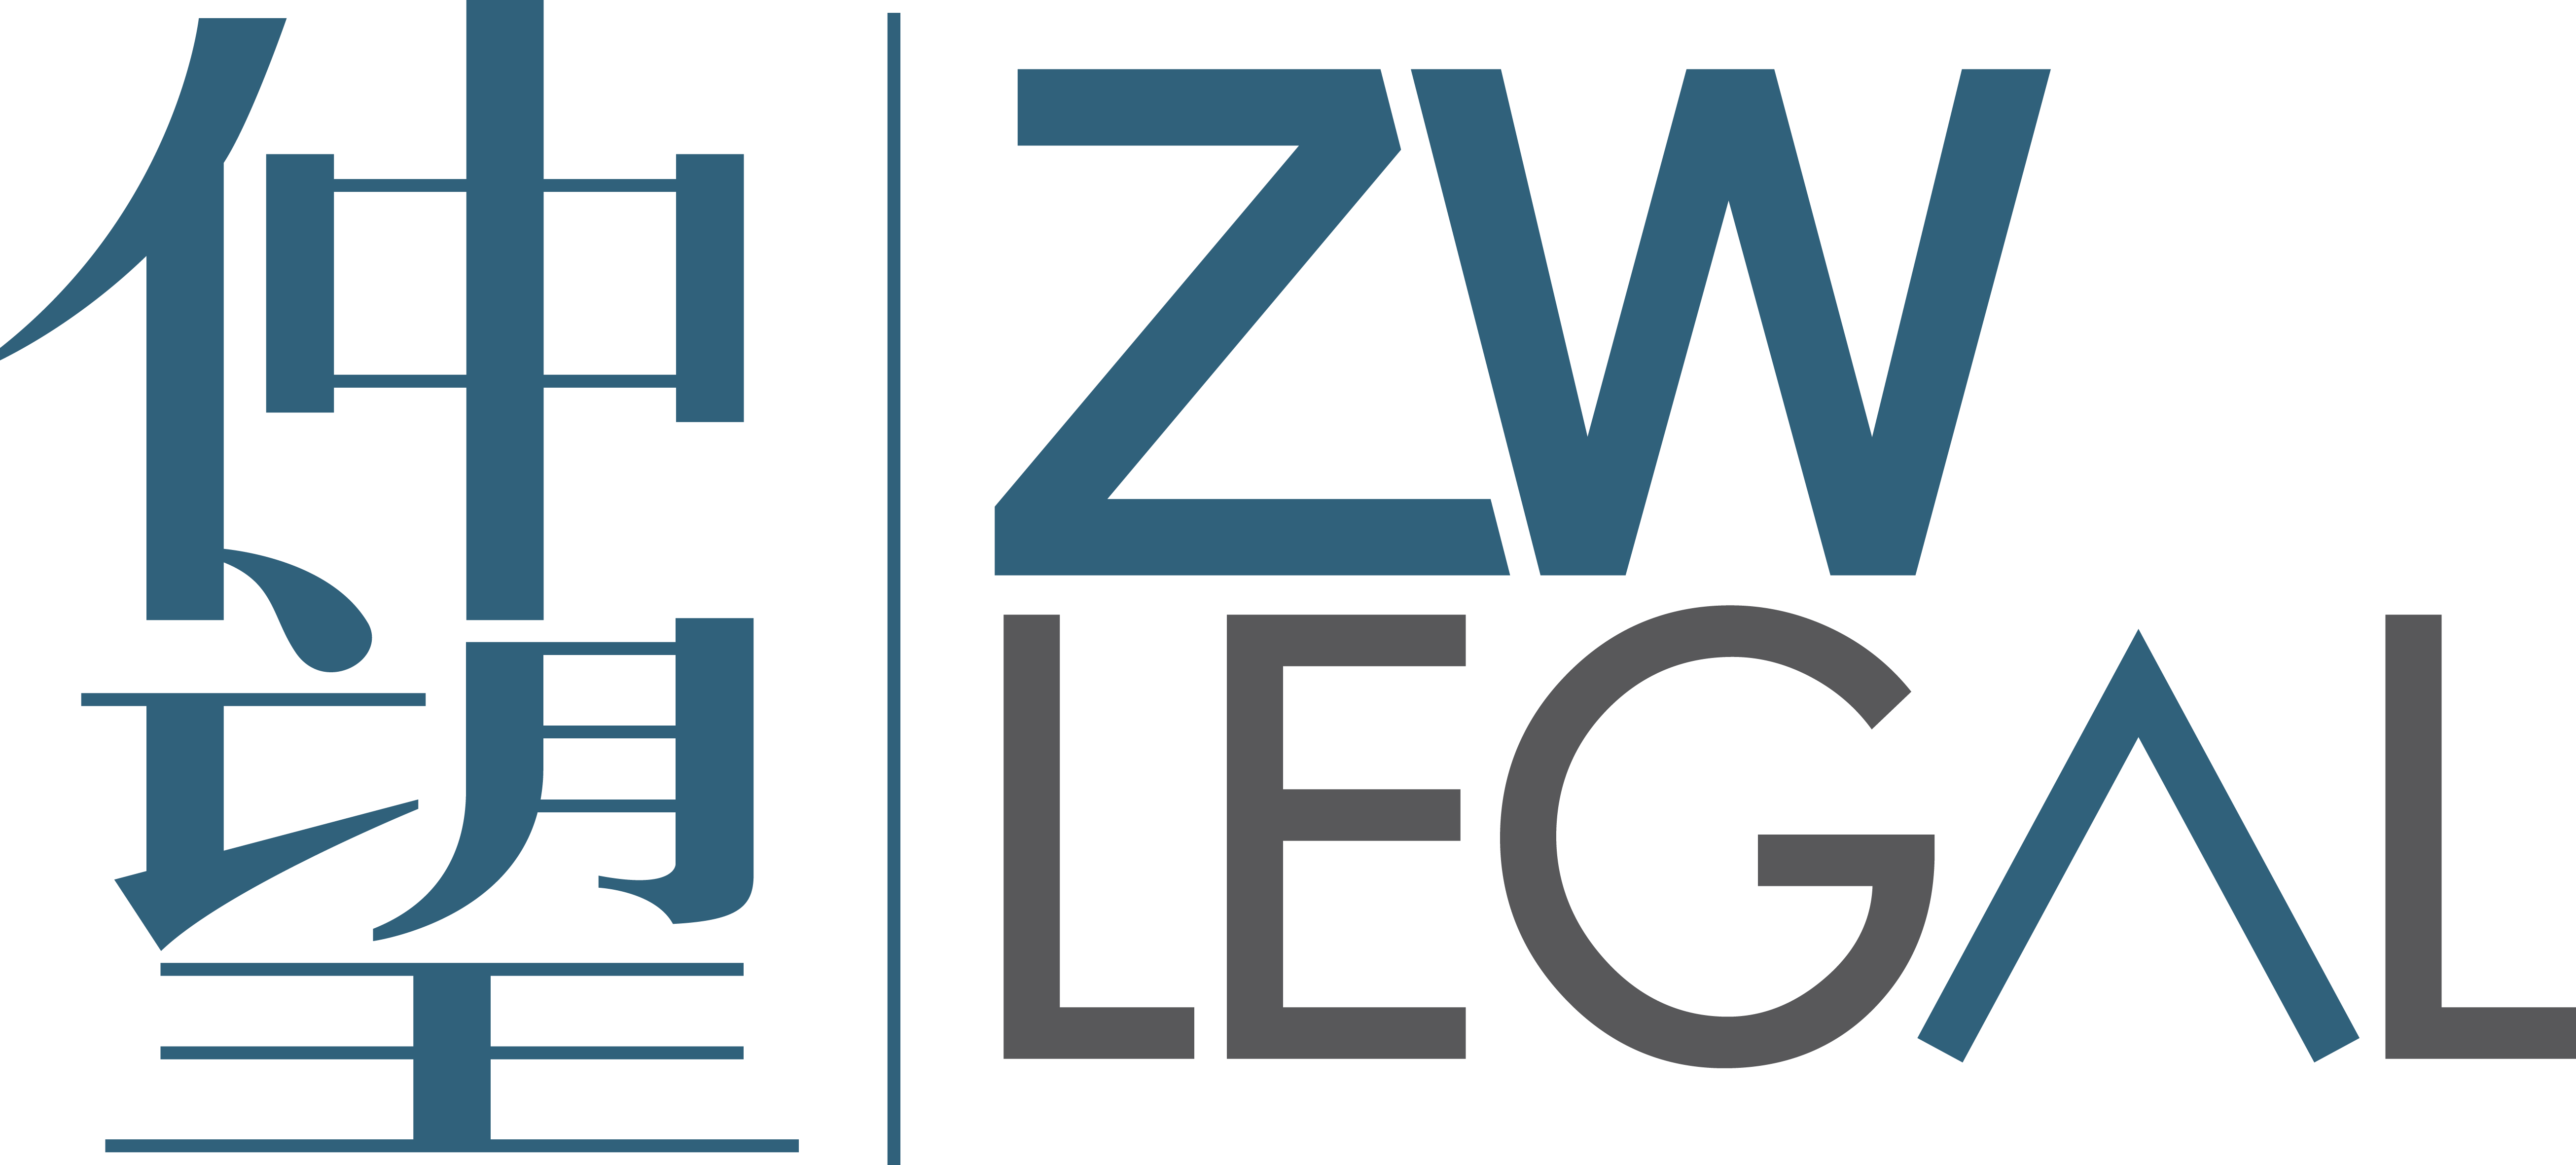 zwlegal_logo